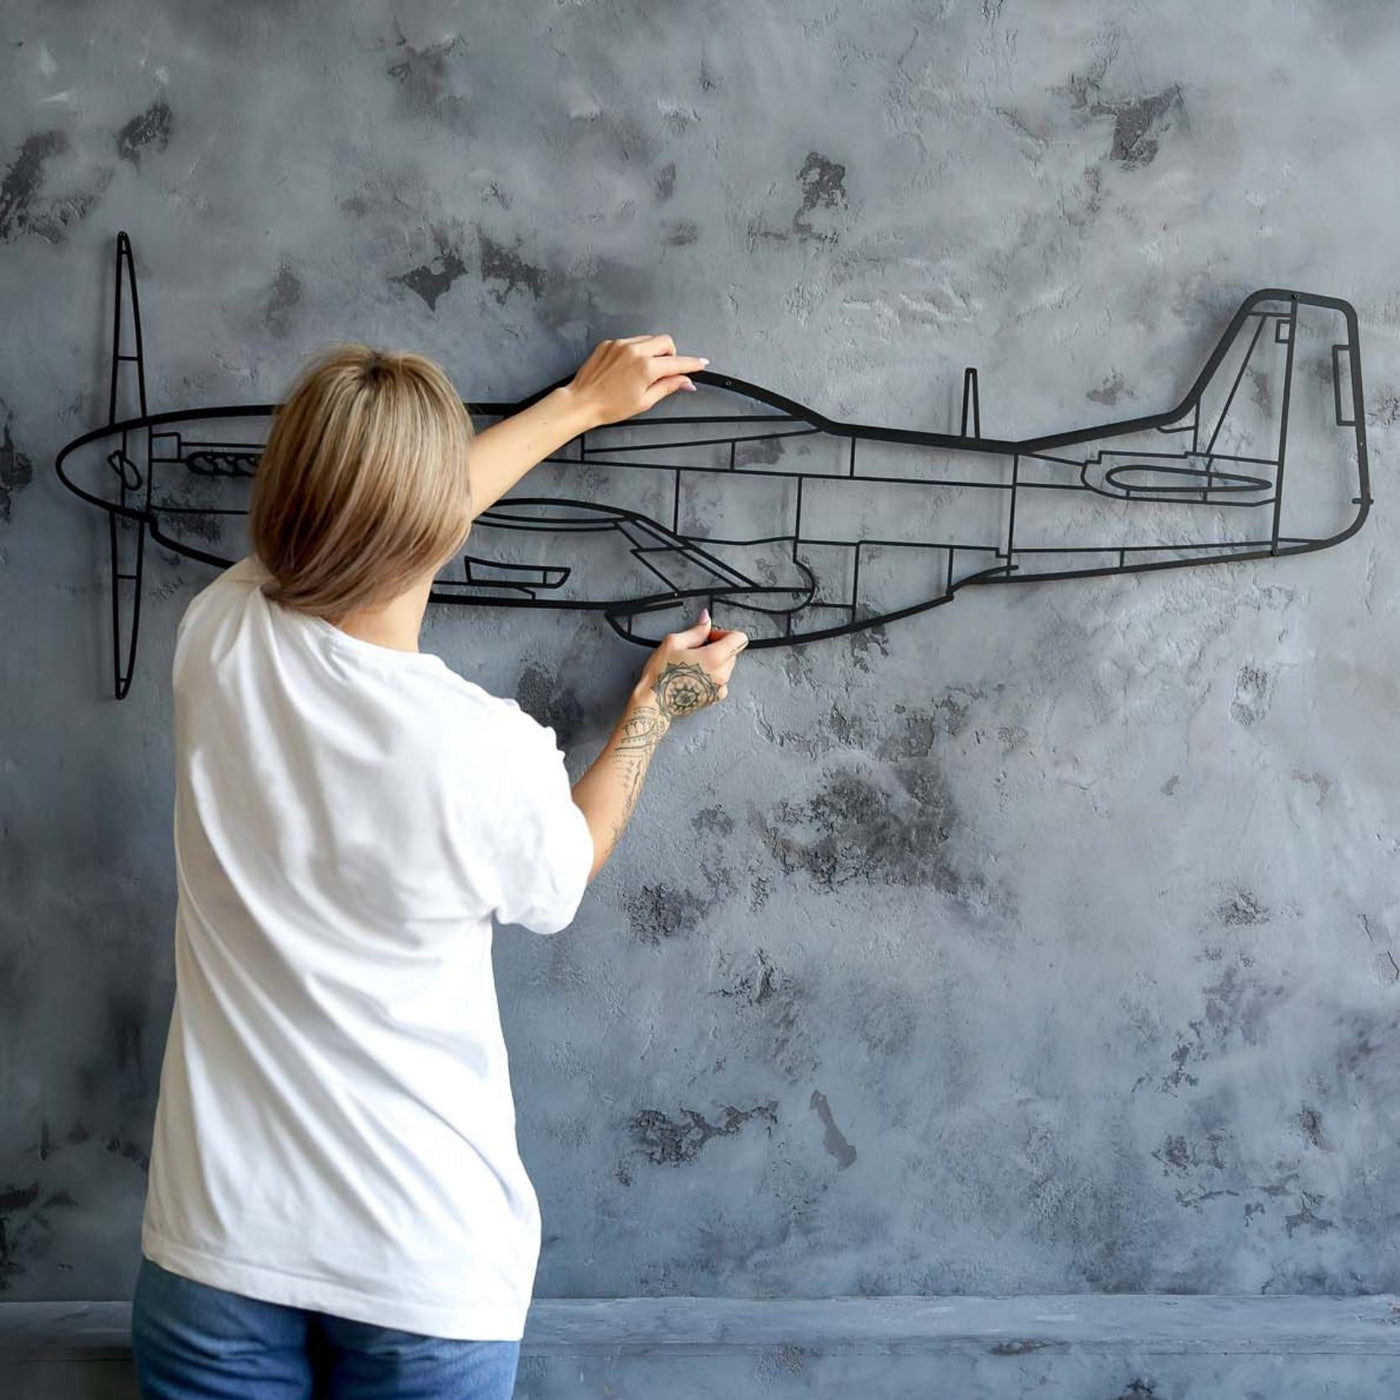 S-64 Skycrane Silhouette Metal Wall Art